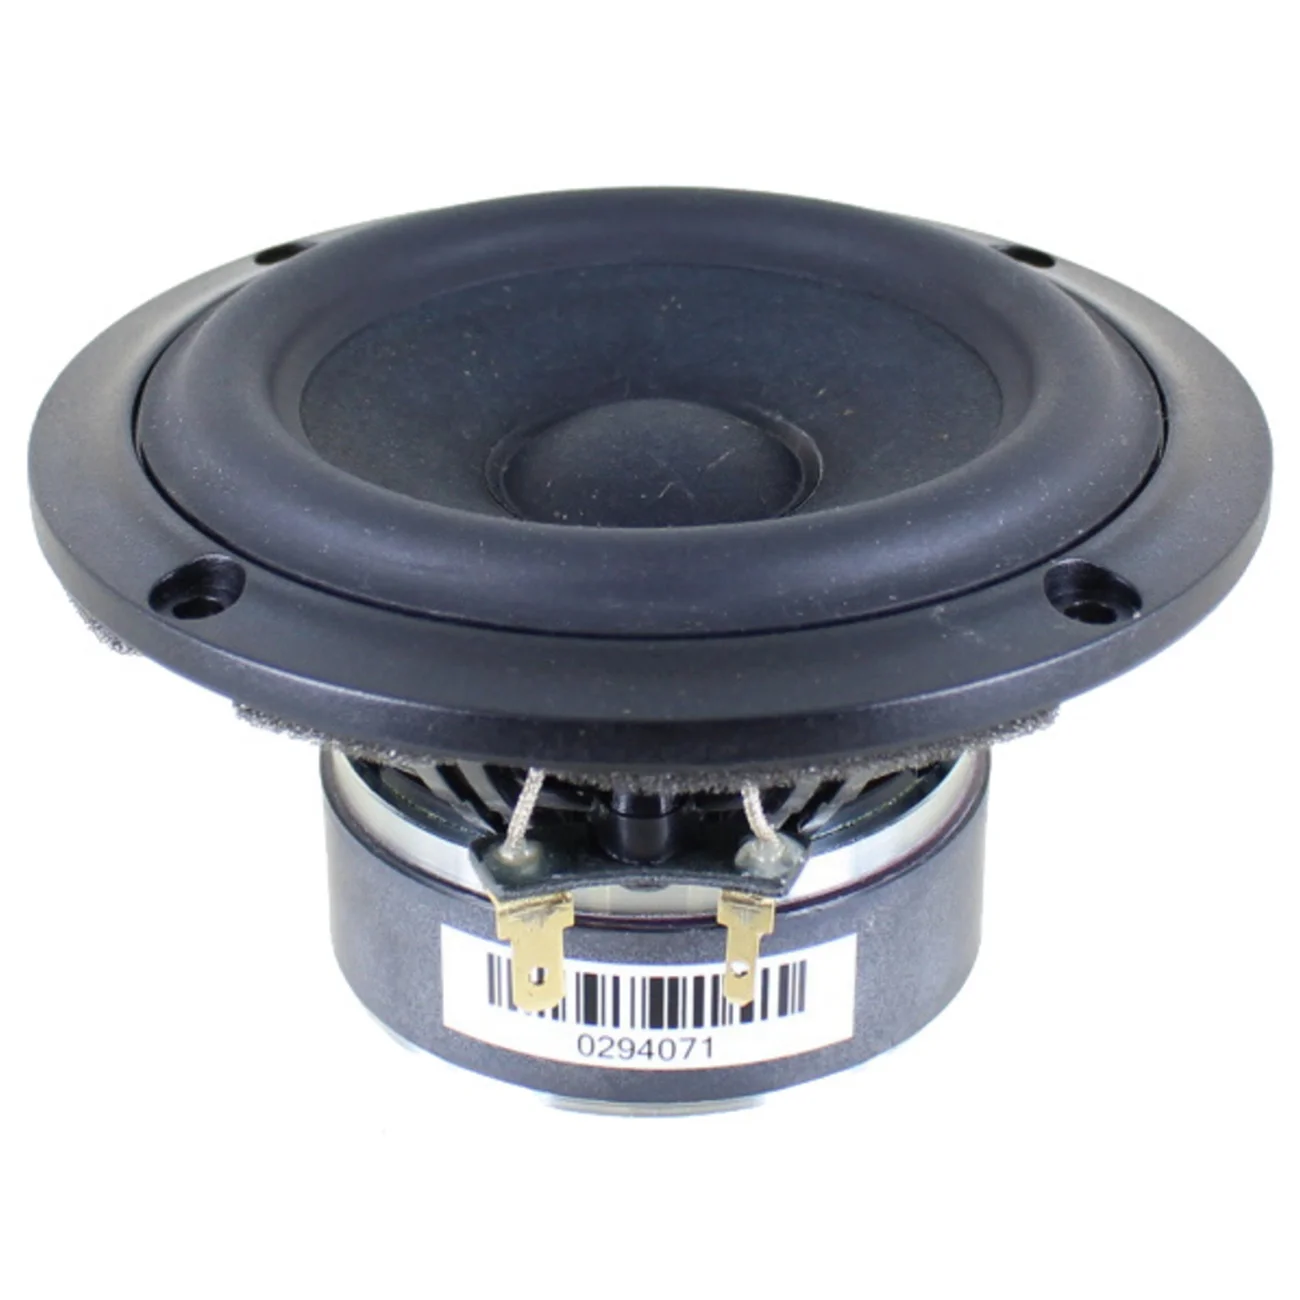 Woofere & midbas - SB Acoustics SB12PFCR25-8, audioclub.ro